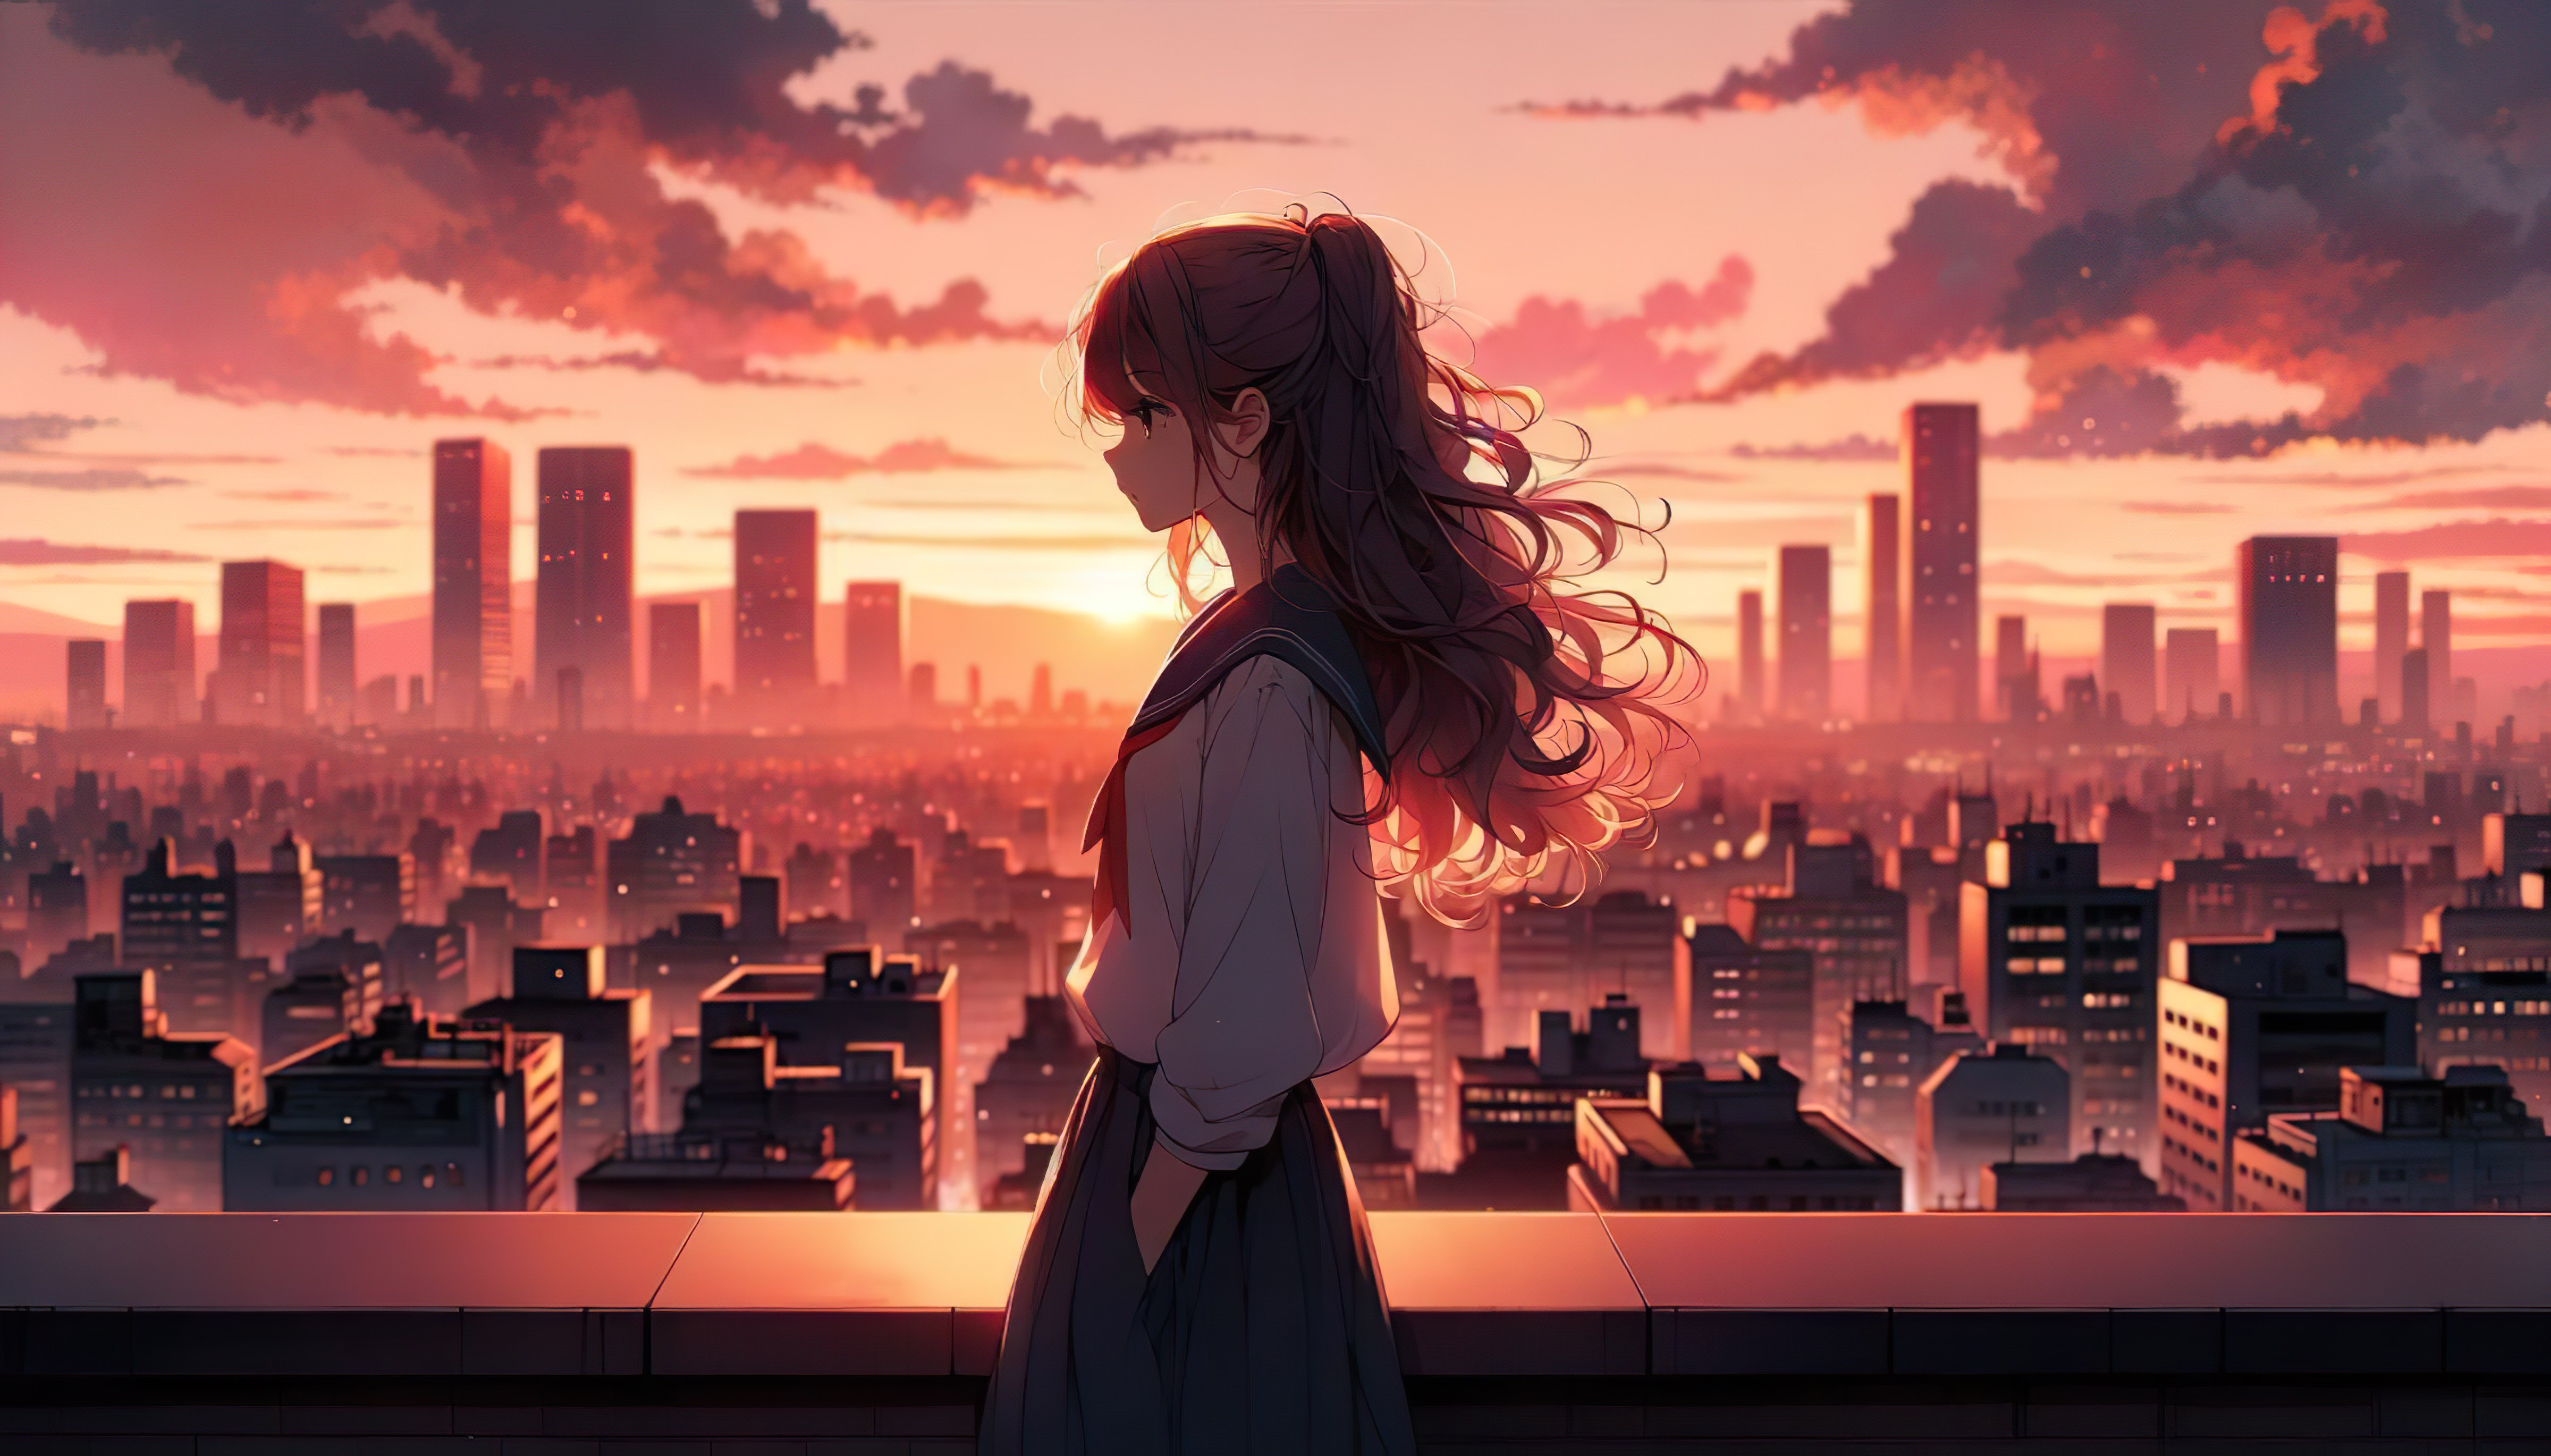 Anime Girls School Uniform Schoolgirl Cityscape Sunset Sunset Glow Hands In Pockets Sky Profile Look 4800x2740